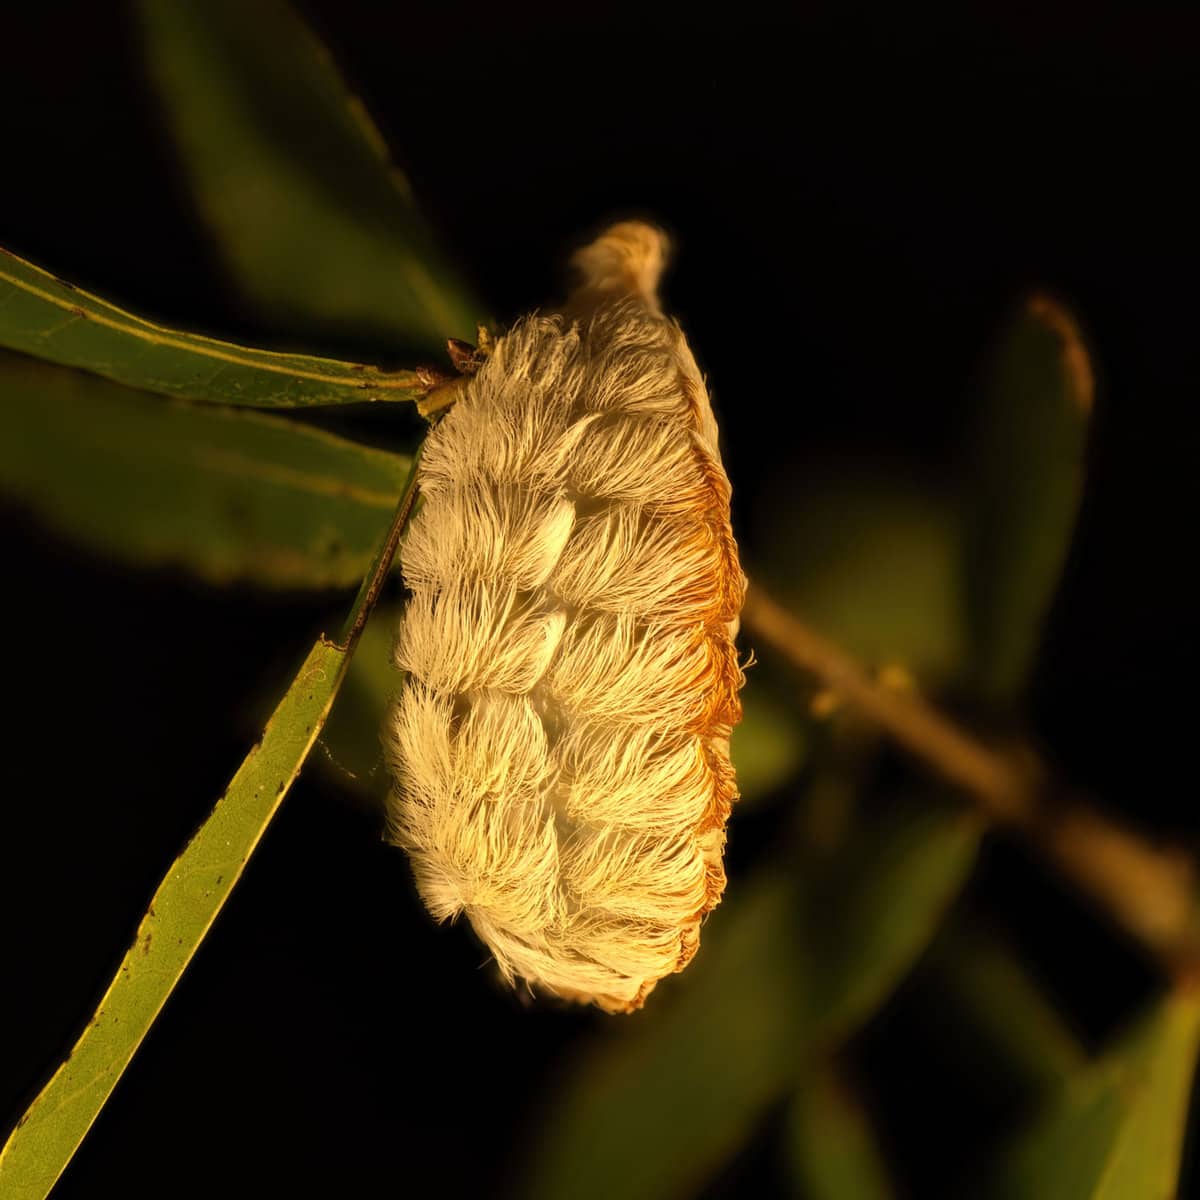 Detailed photo of a puss caterpillar